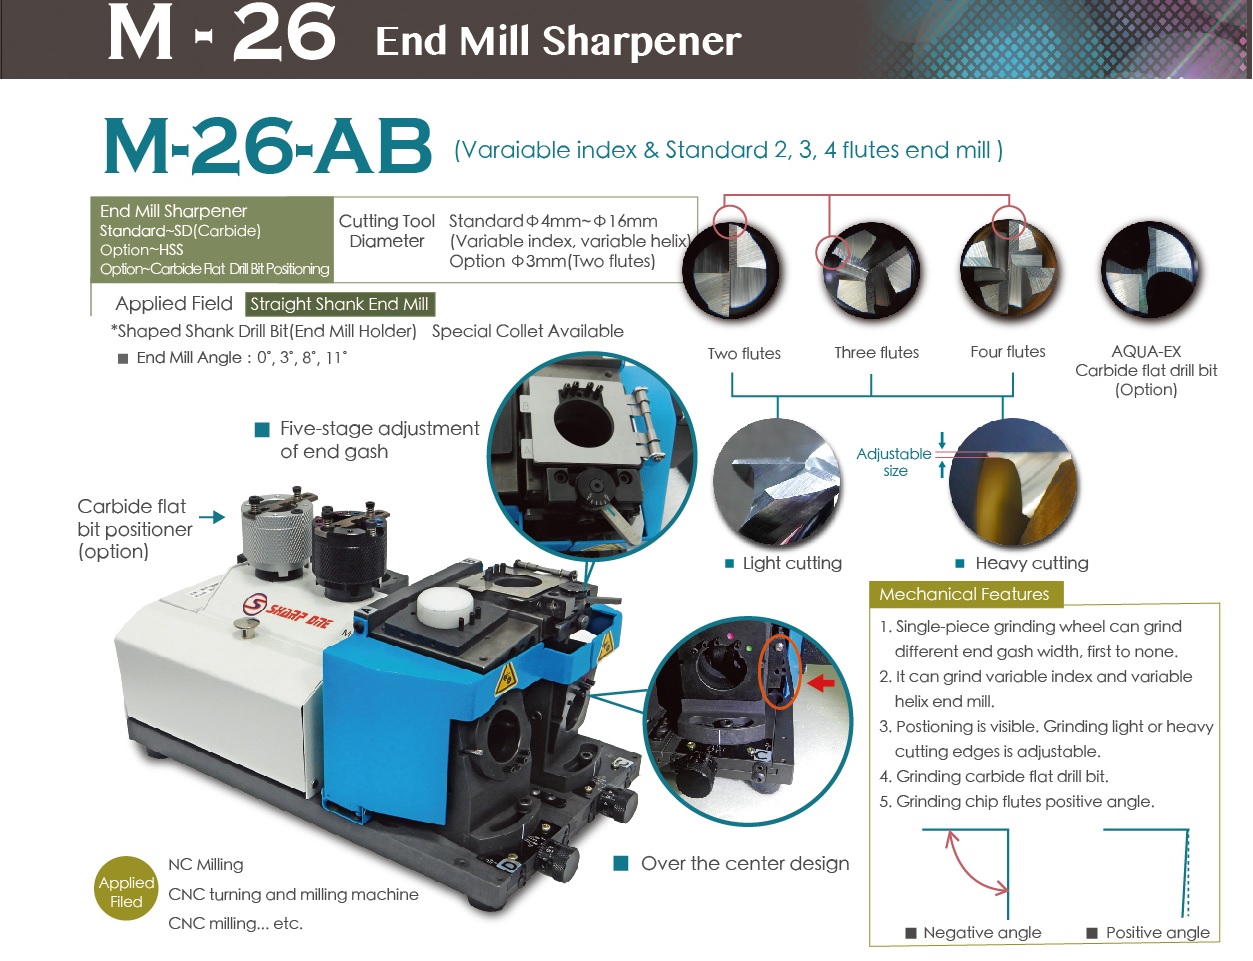 M-26-AB End Mill Sharpener